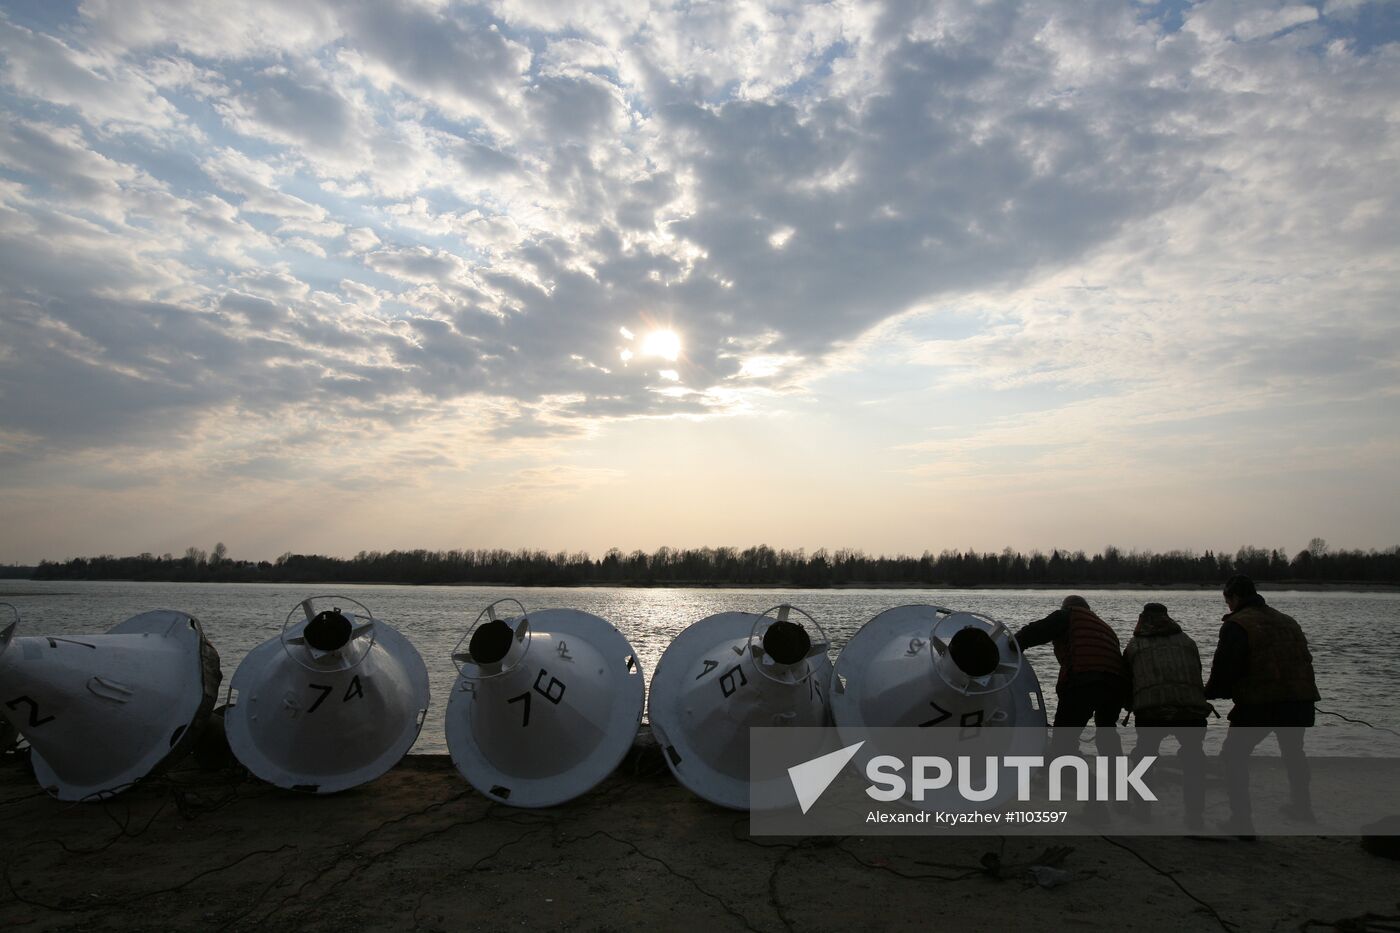 Installing buoys on Ob River before navigation season